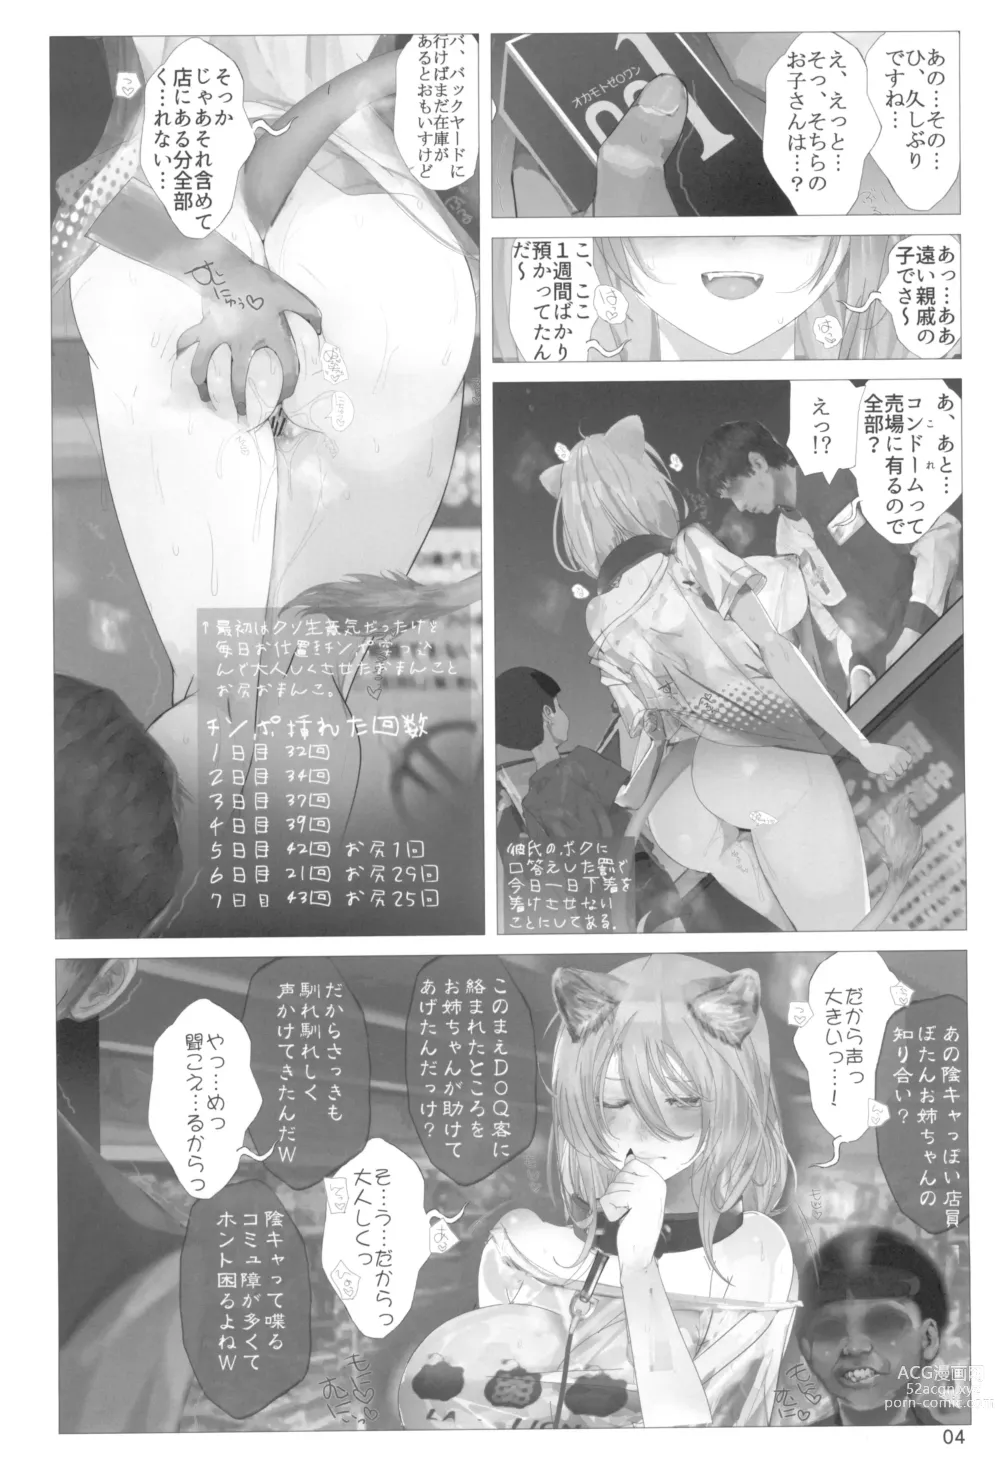 Page 4 of doujinshi Isaimemin Shishiron VS Kusokugaki